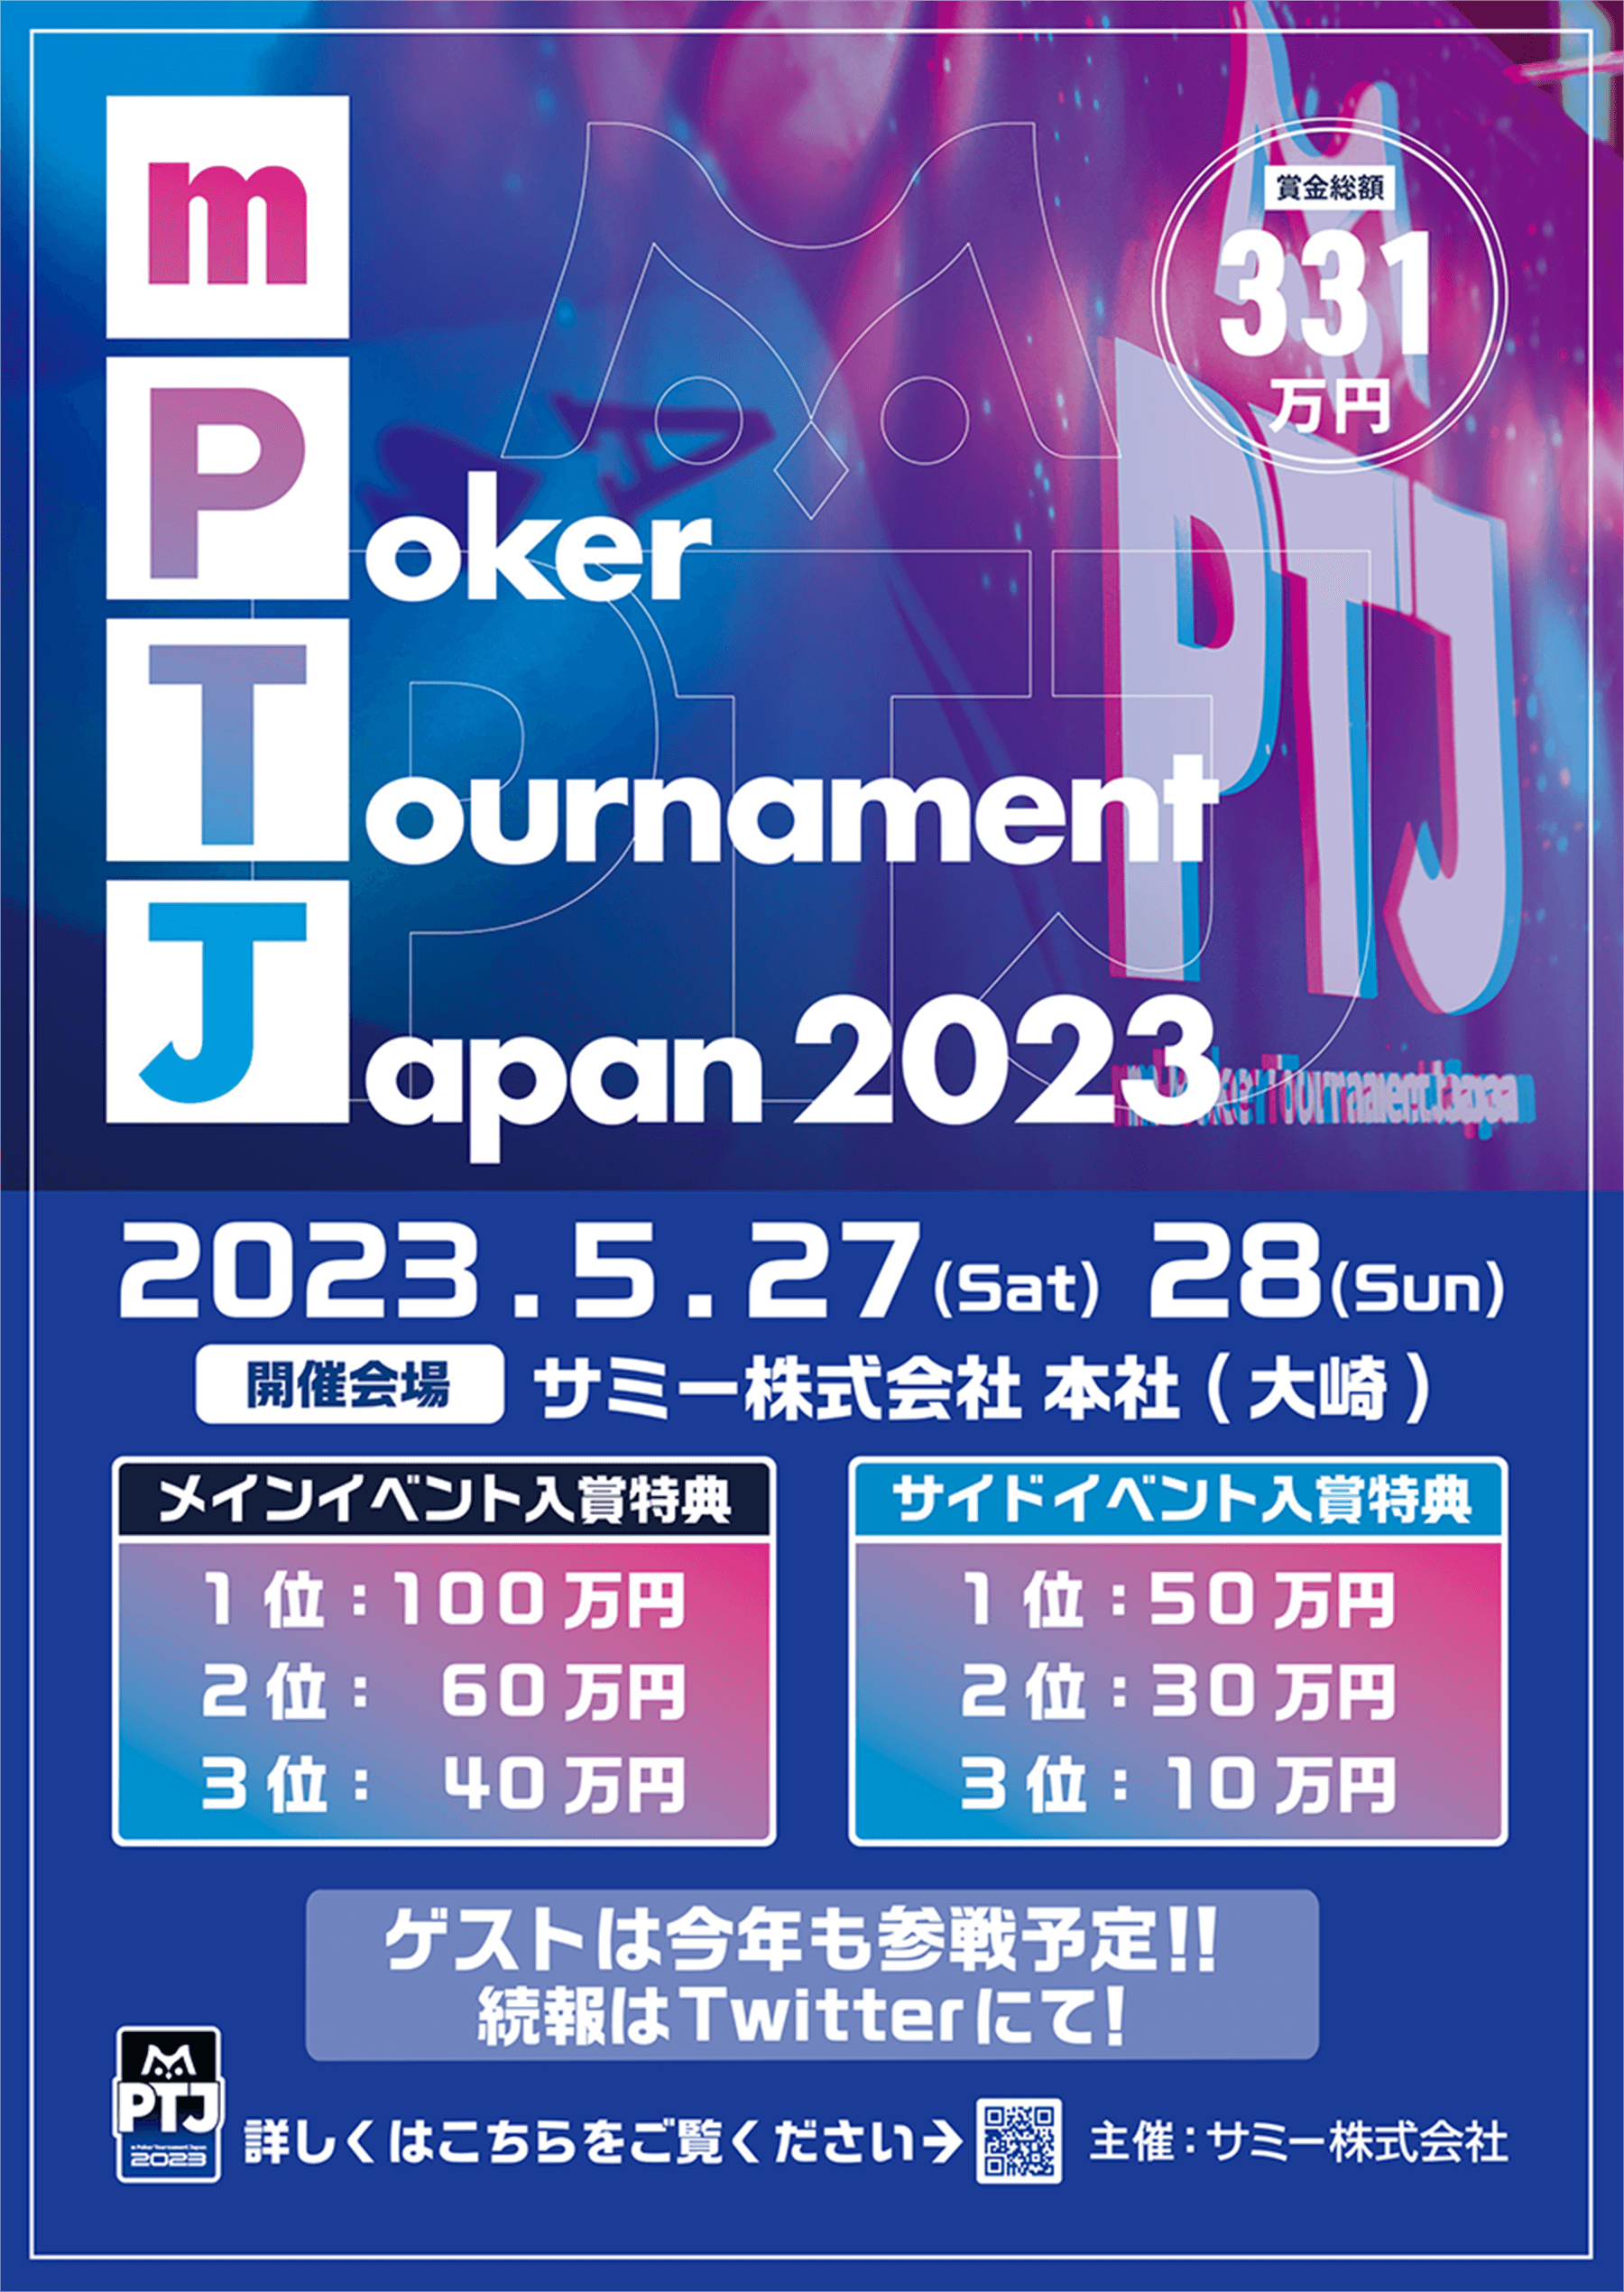 m Poker Tournament Japan 2023 賞金総額 331万円 2023.5.27(Sat) 28(Sun)